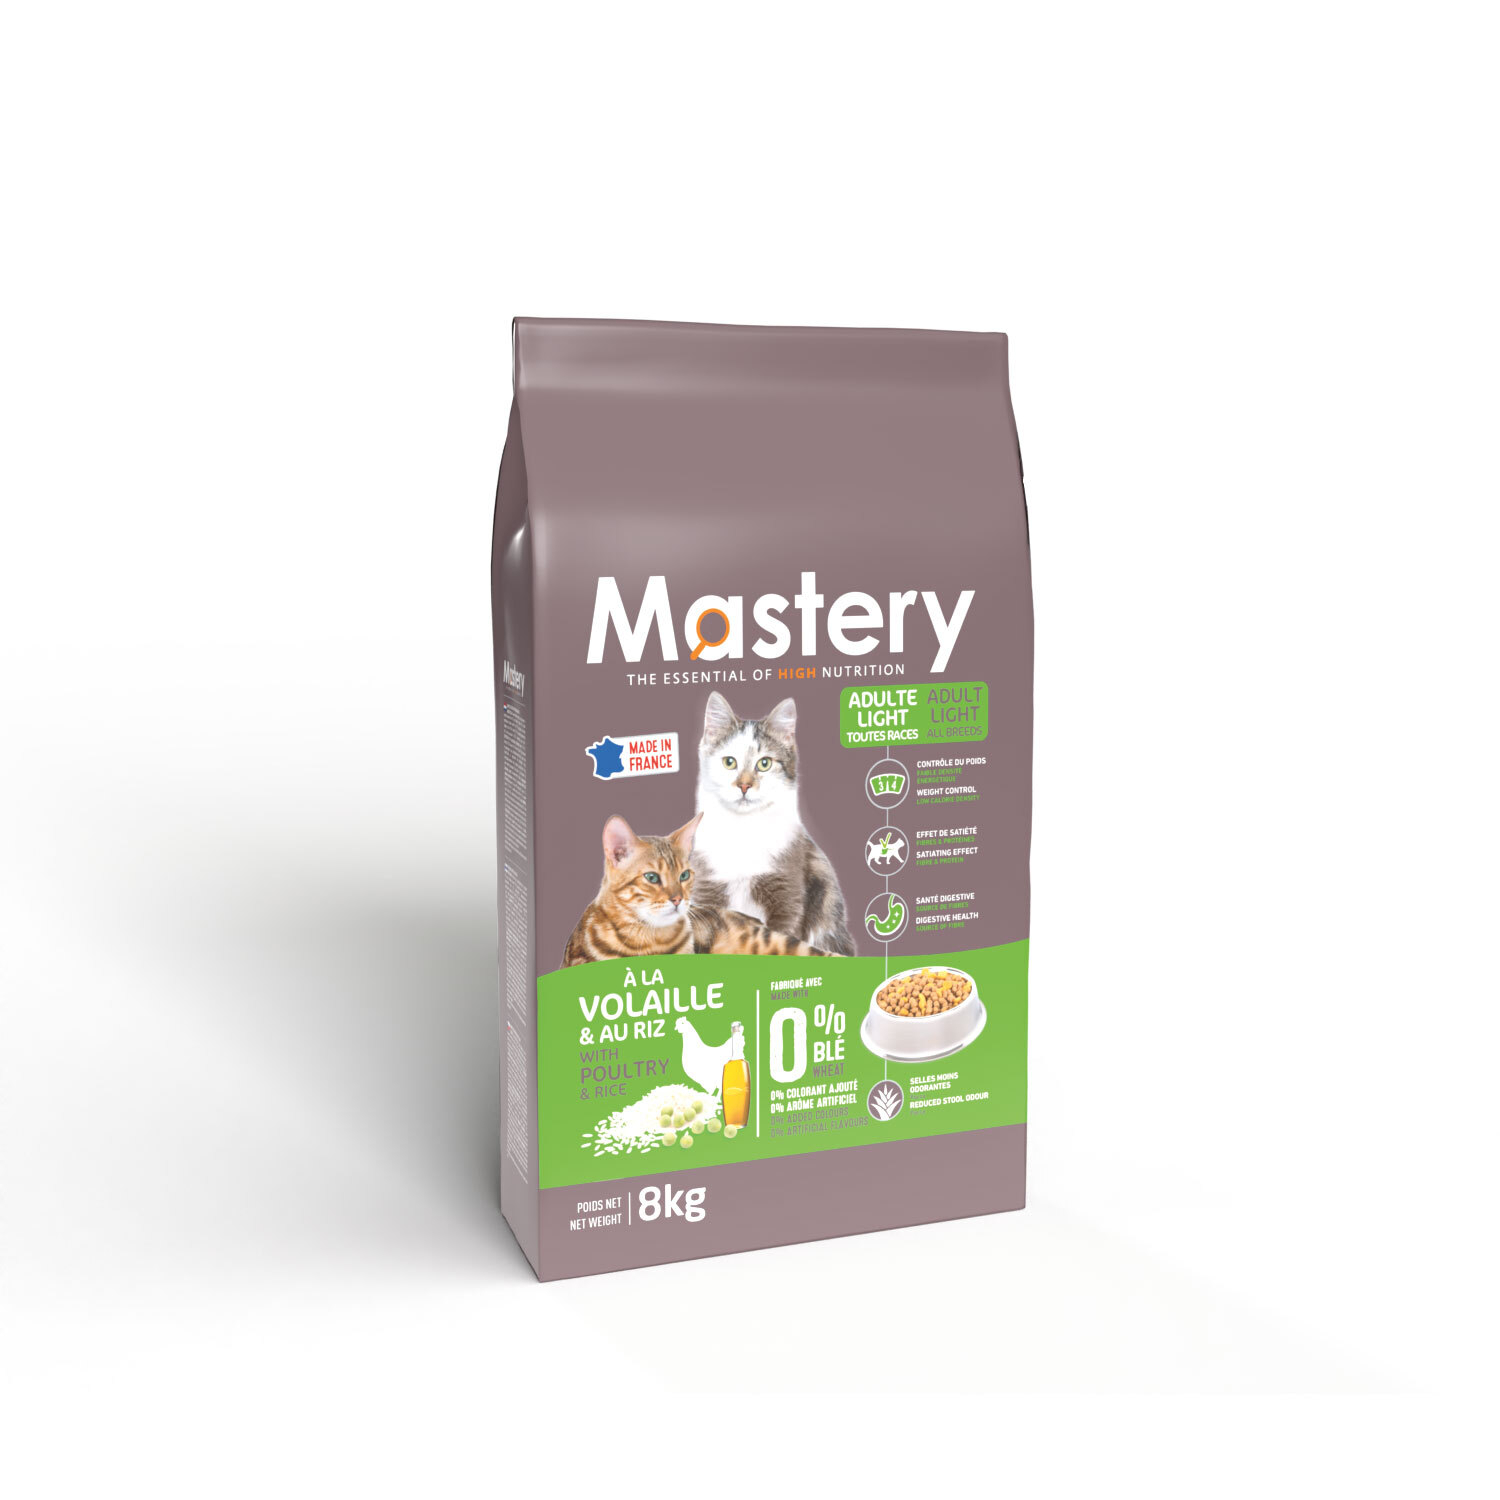 Mastery Adult Light Aves y arroz pienso para gatos